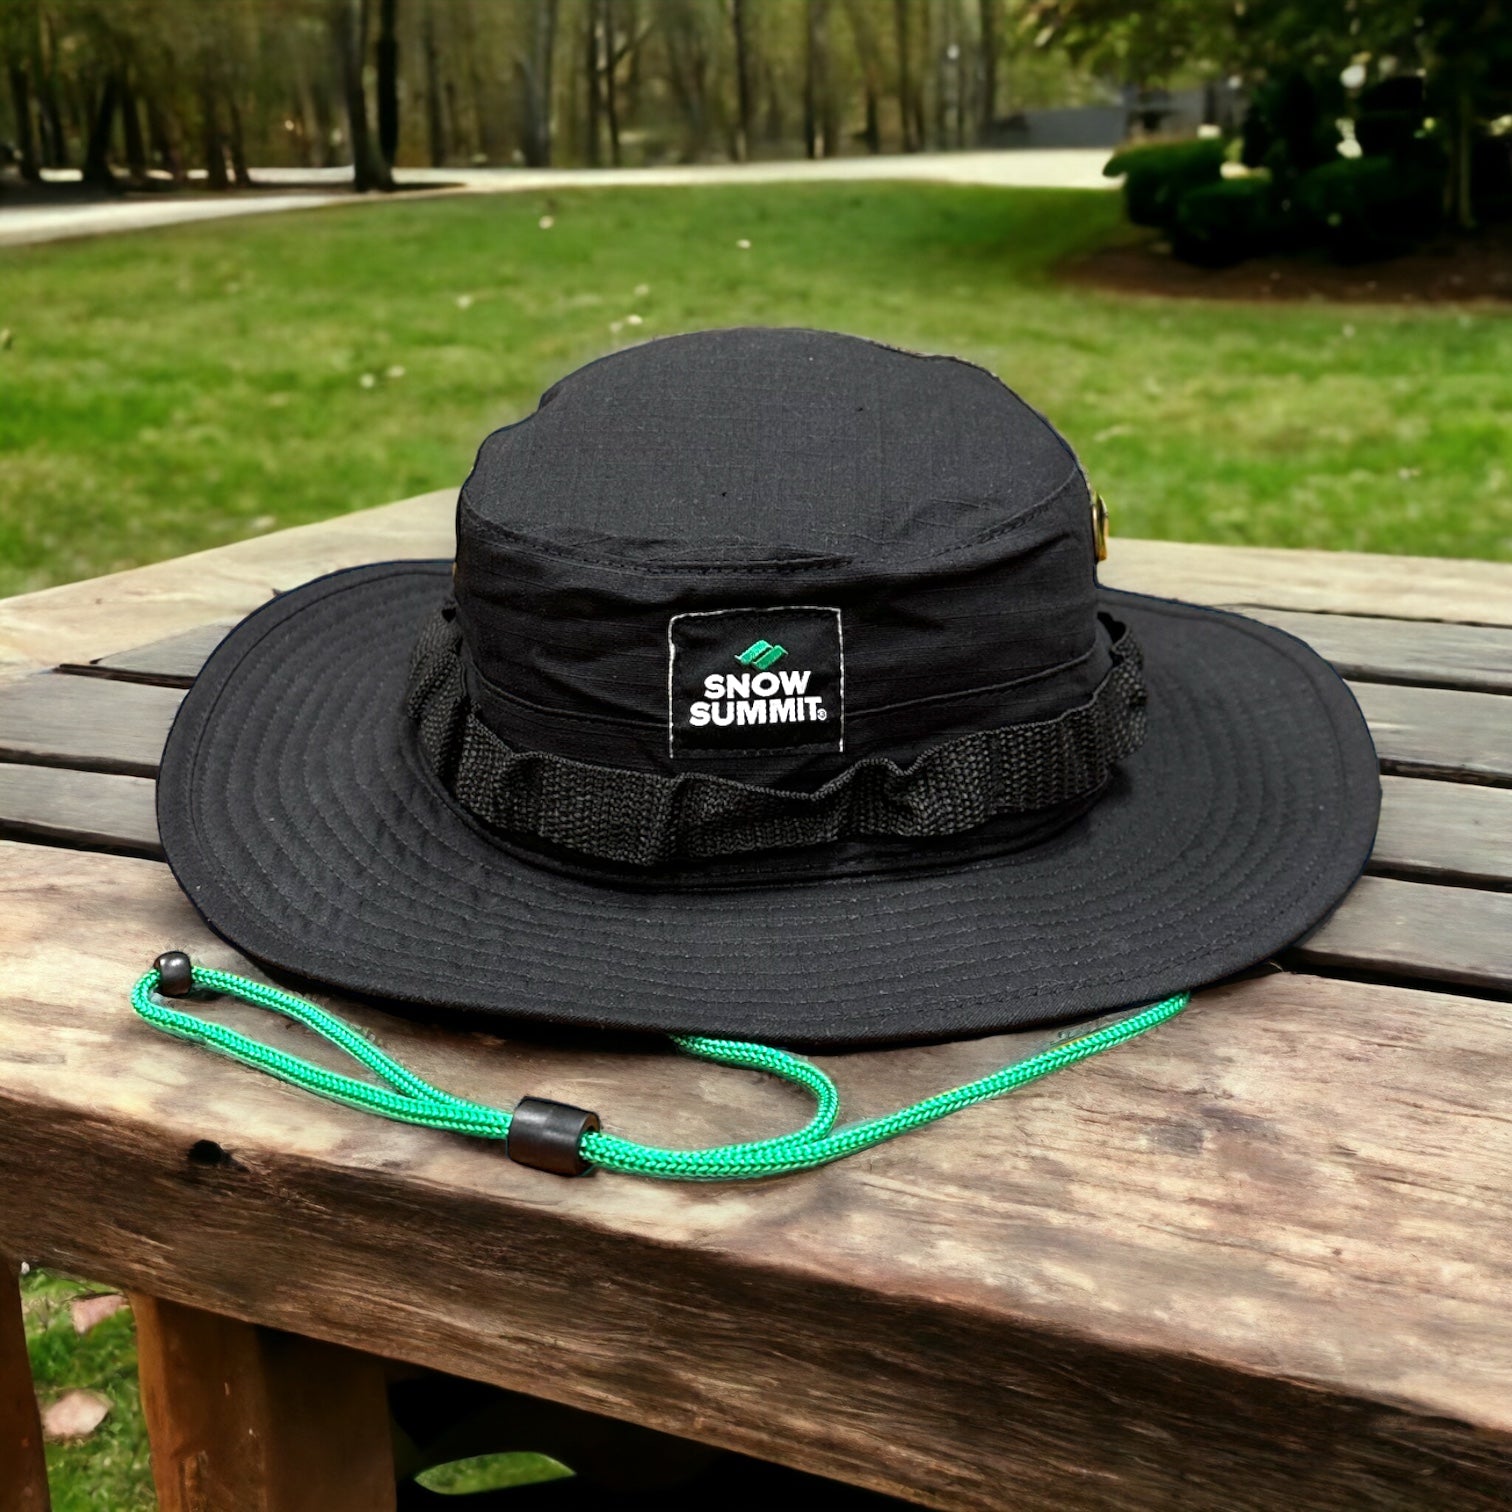 Snow Summit Boonie Hat in black with green drawstring